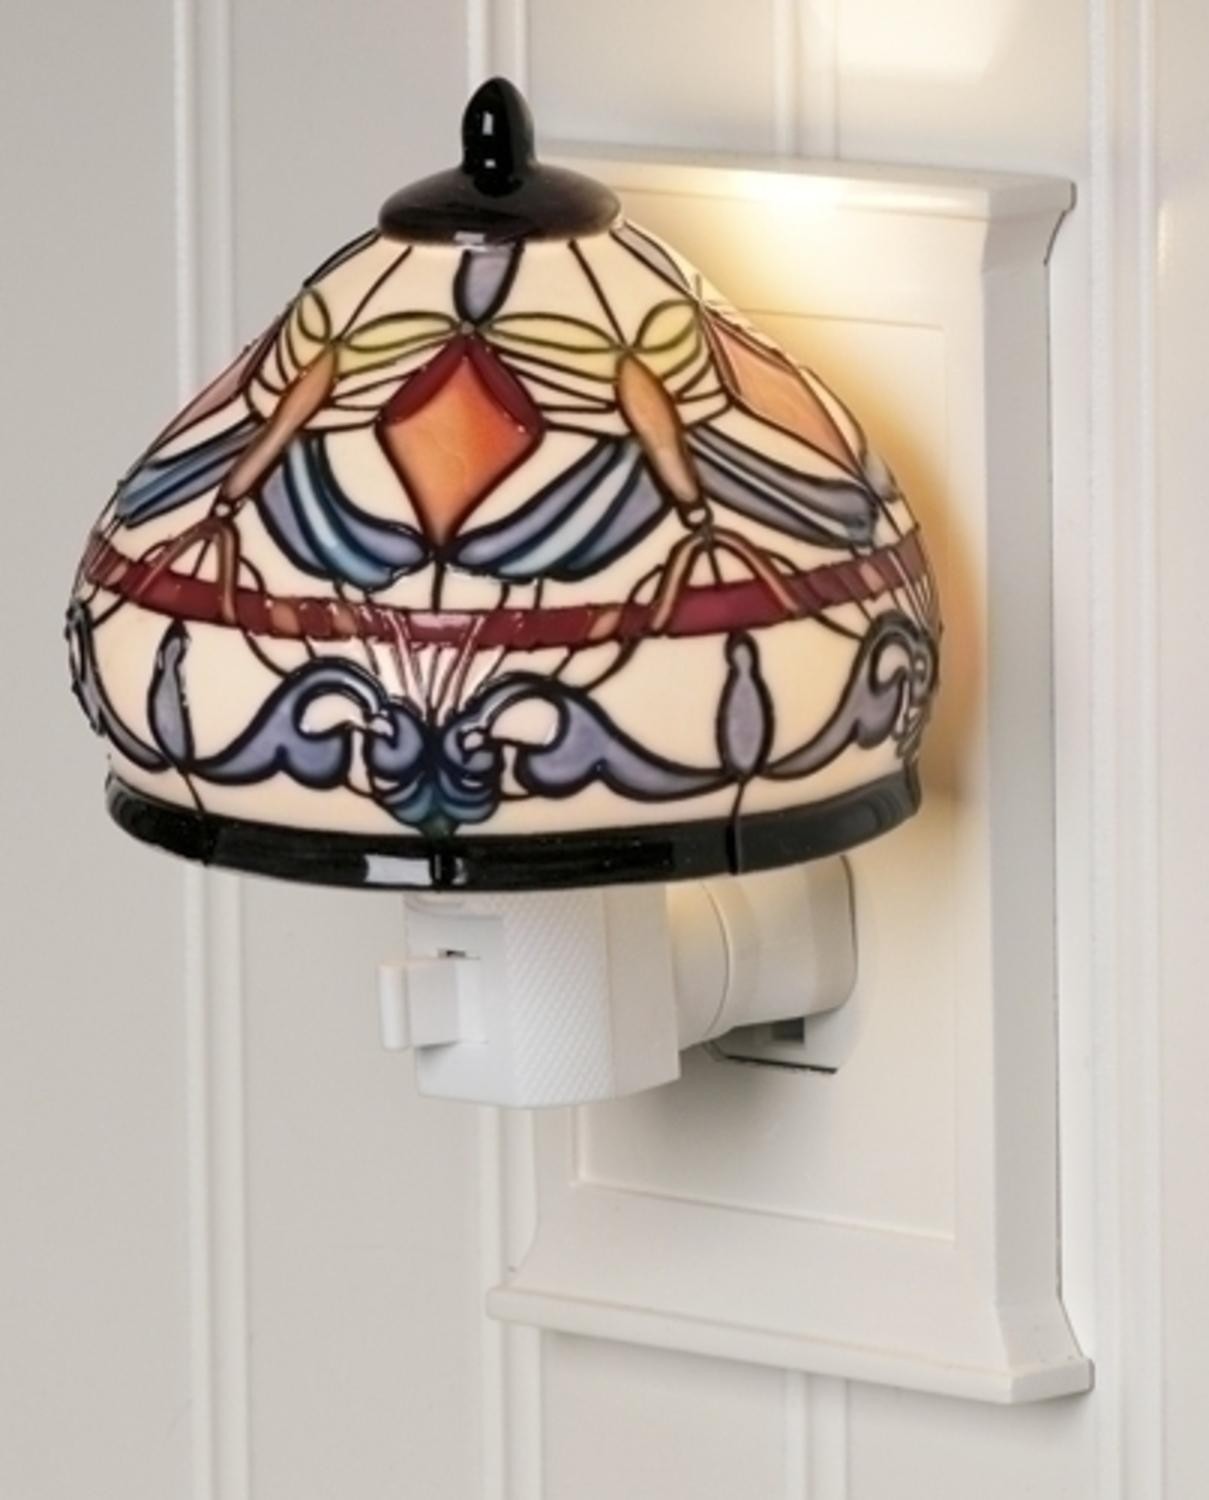 4 dragonfly antique style lamp shade ceramic night light